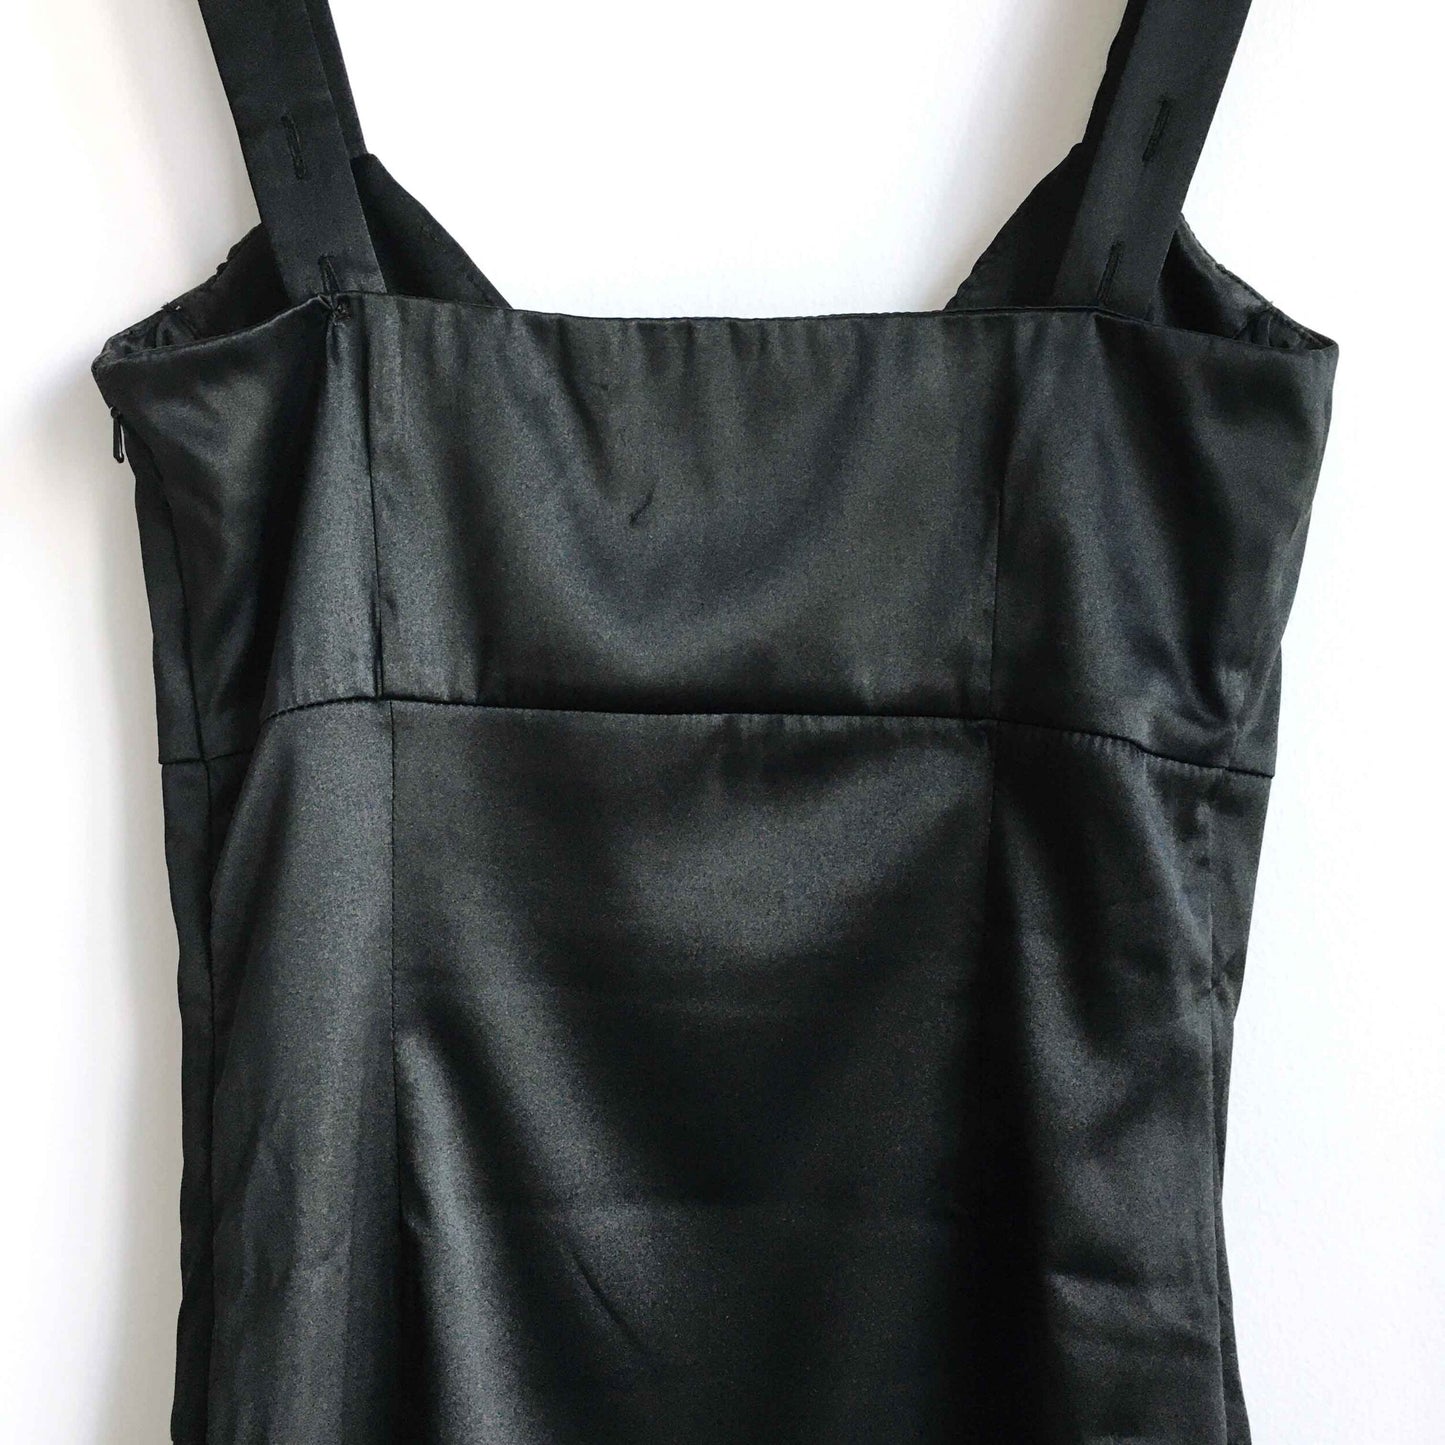 Vera Moda fitted satin black pencil dress - size 34